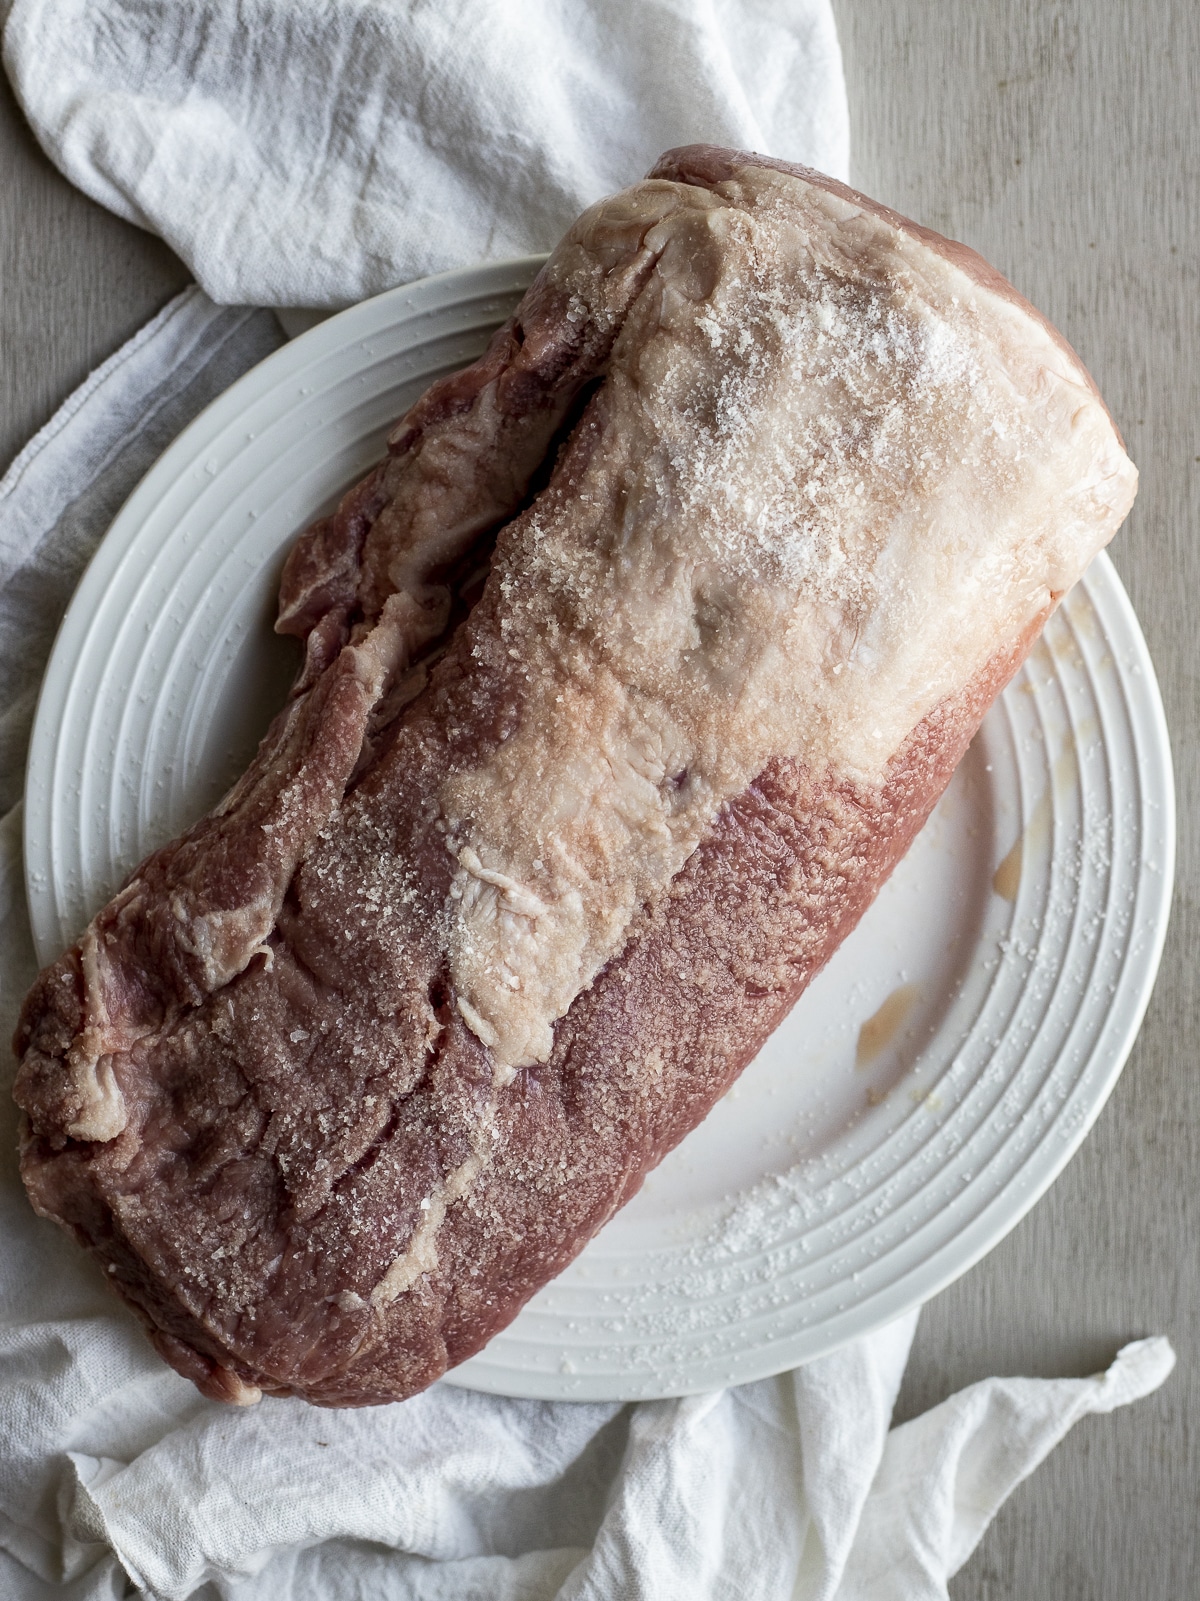 Salted pork loin roast on a white plate.